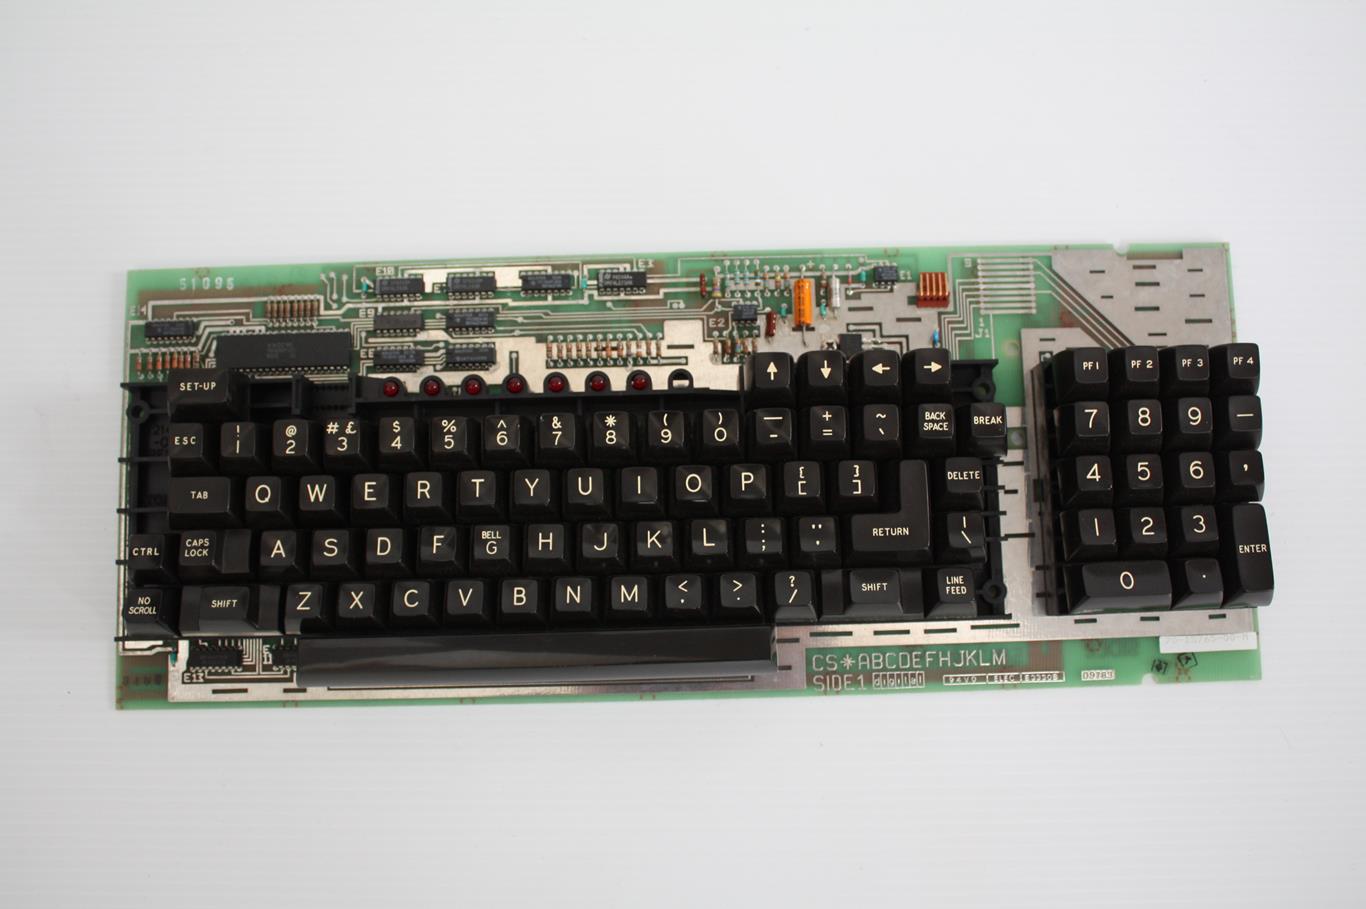 DEC VT100 - keyboard mechanism front